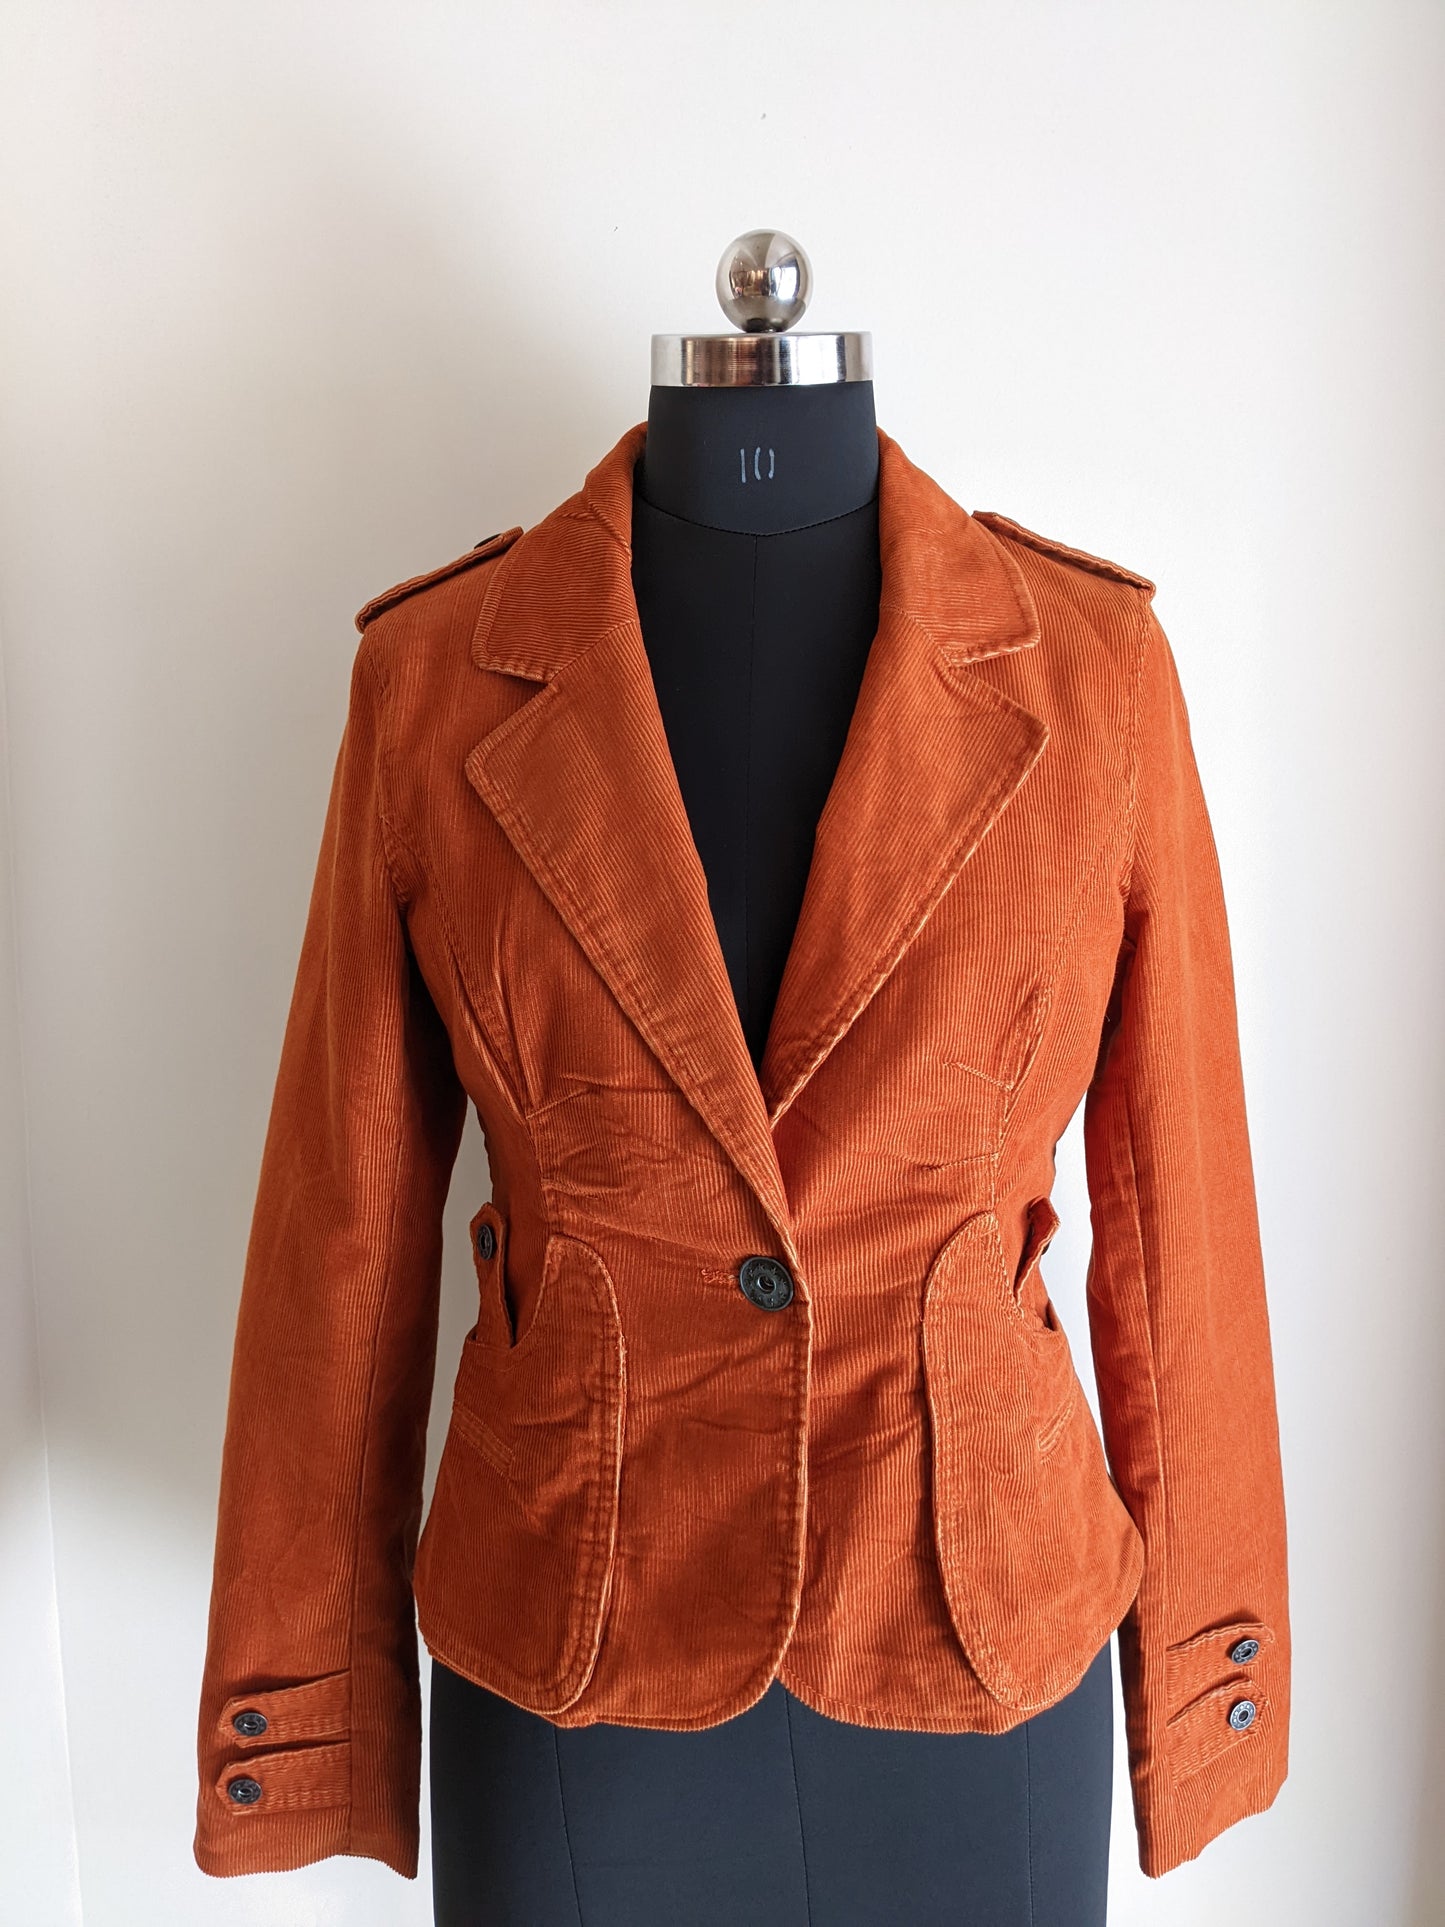 Vero Moda Rust Orange Corduroy Jacket